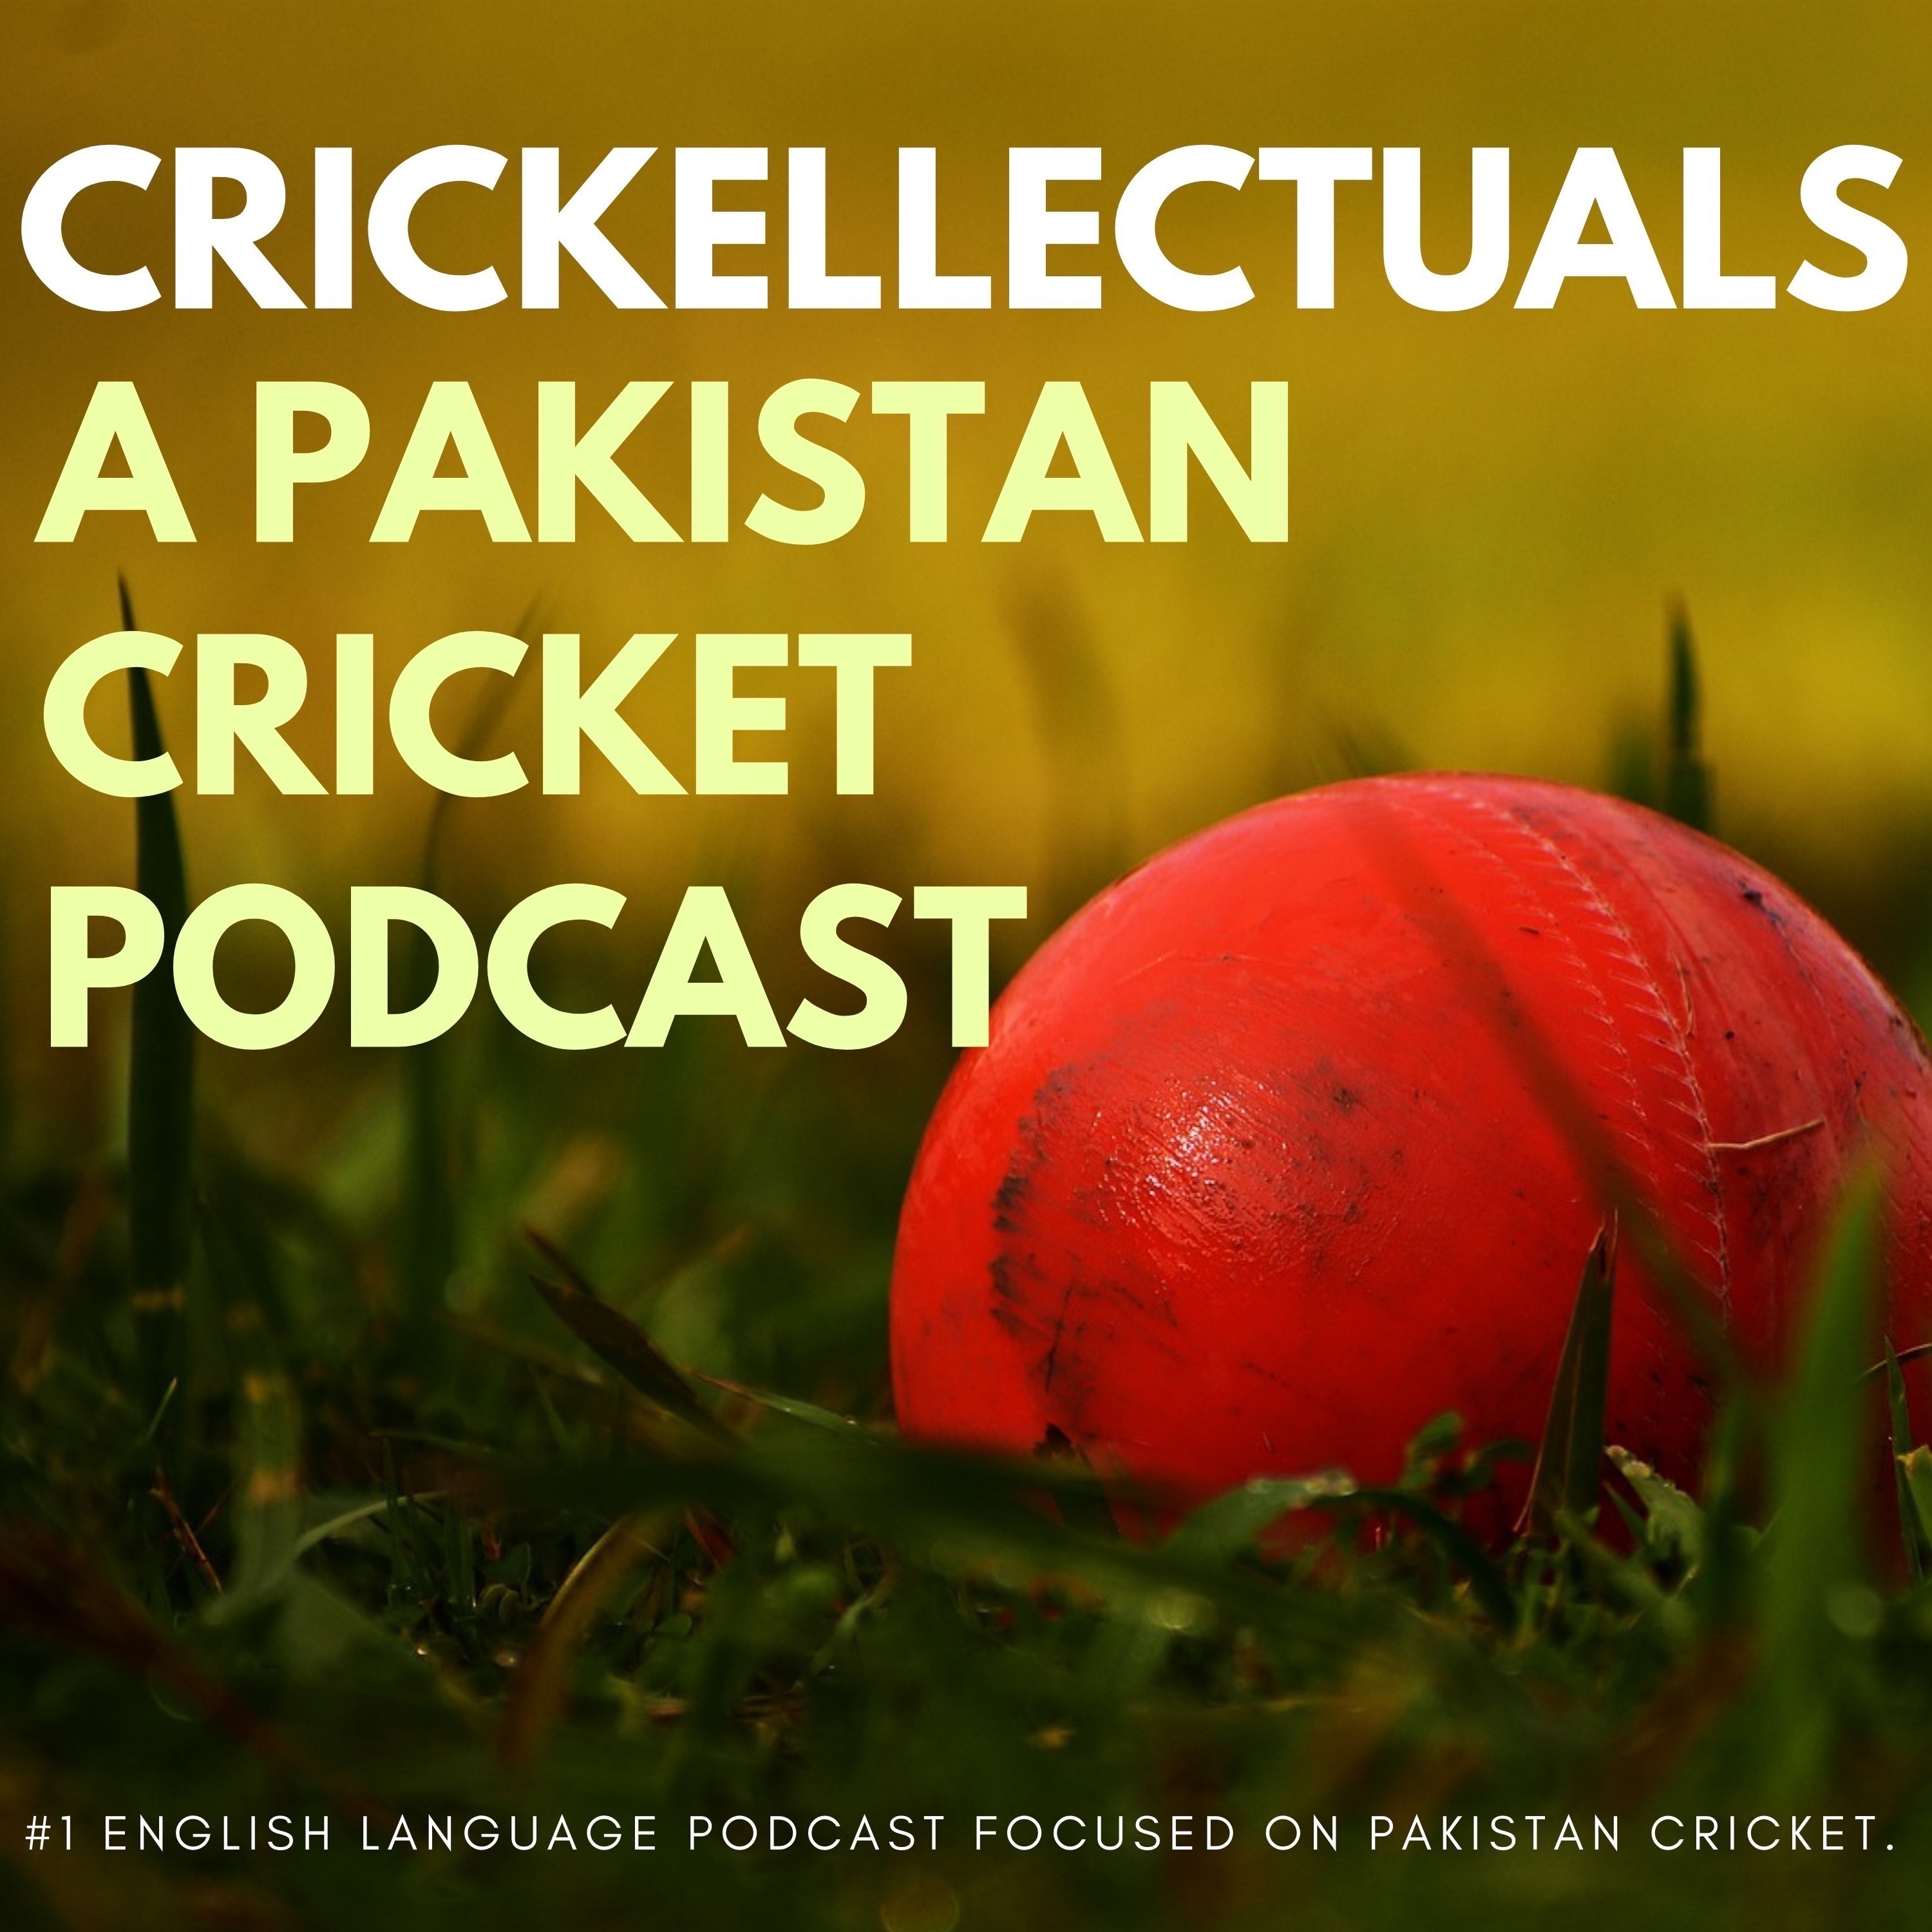 Ep.24: Crickellectuals Podcast is back with Season 2! Pakistan vs WI 1st ODI analysis, International Cricket returns to Multan.